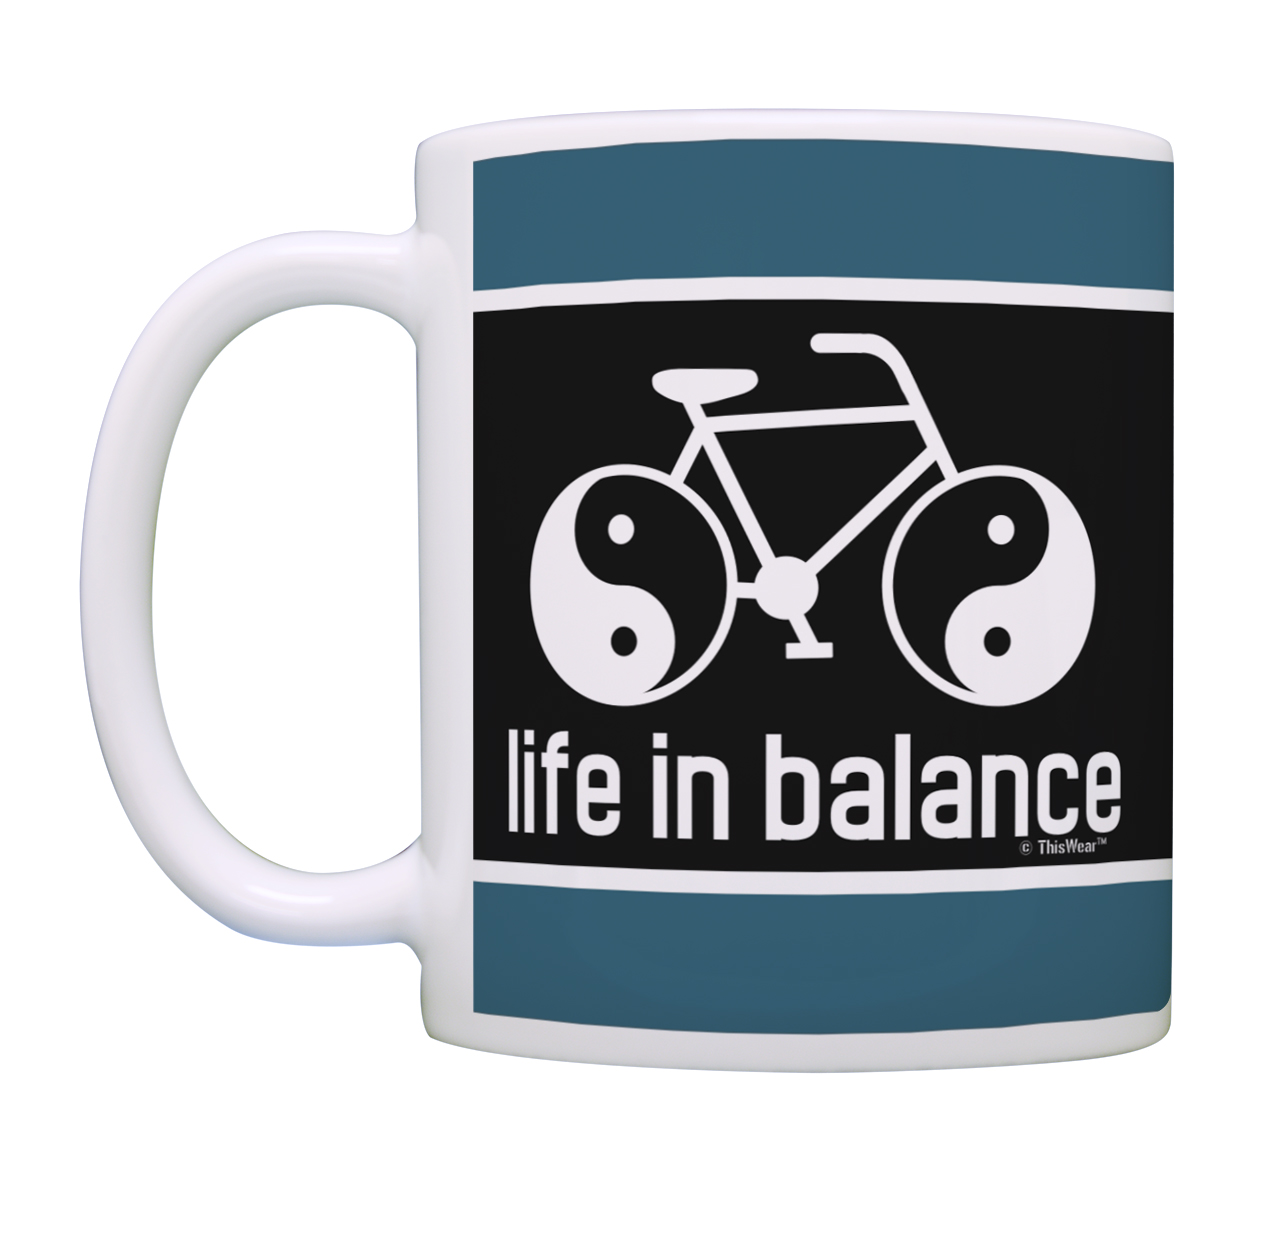 ThisWear Bicycle Coffee Mug Set Life in Balance Yin Yang Mug Bike Themed Gifts Mountain Biking Mug Set Cyclists Gifts for Men and Women Inspirational Mugs 11 ounce 2 Pack Coffee Mugs Bike - image 2 of 4